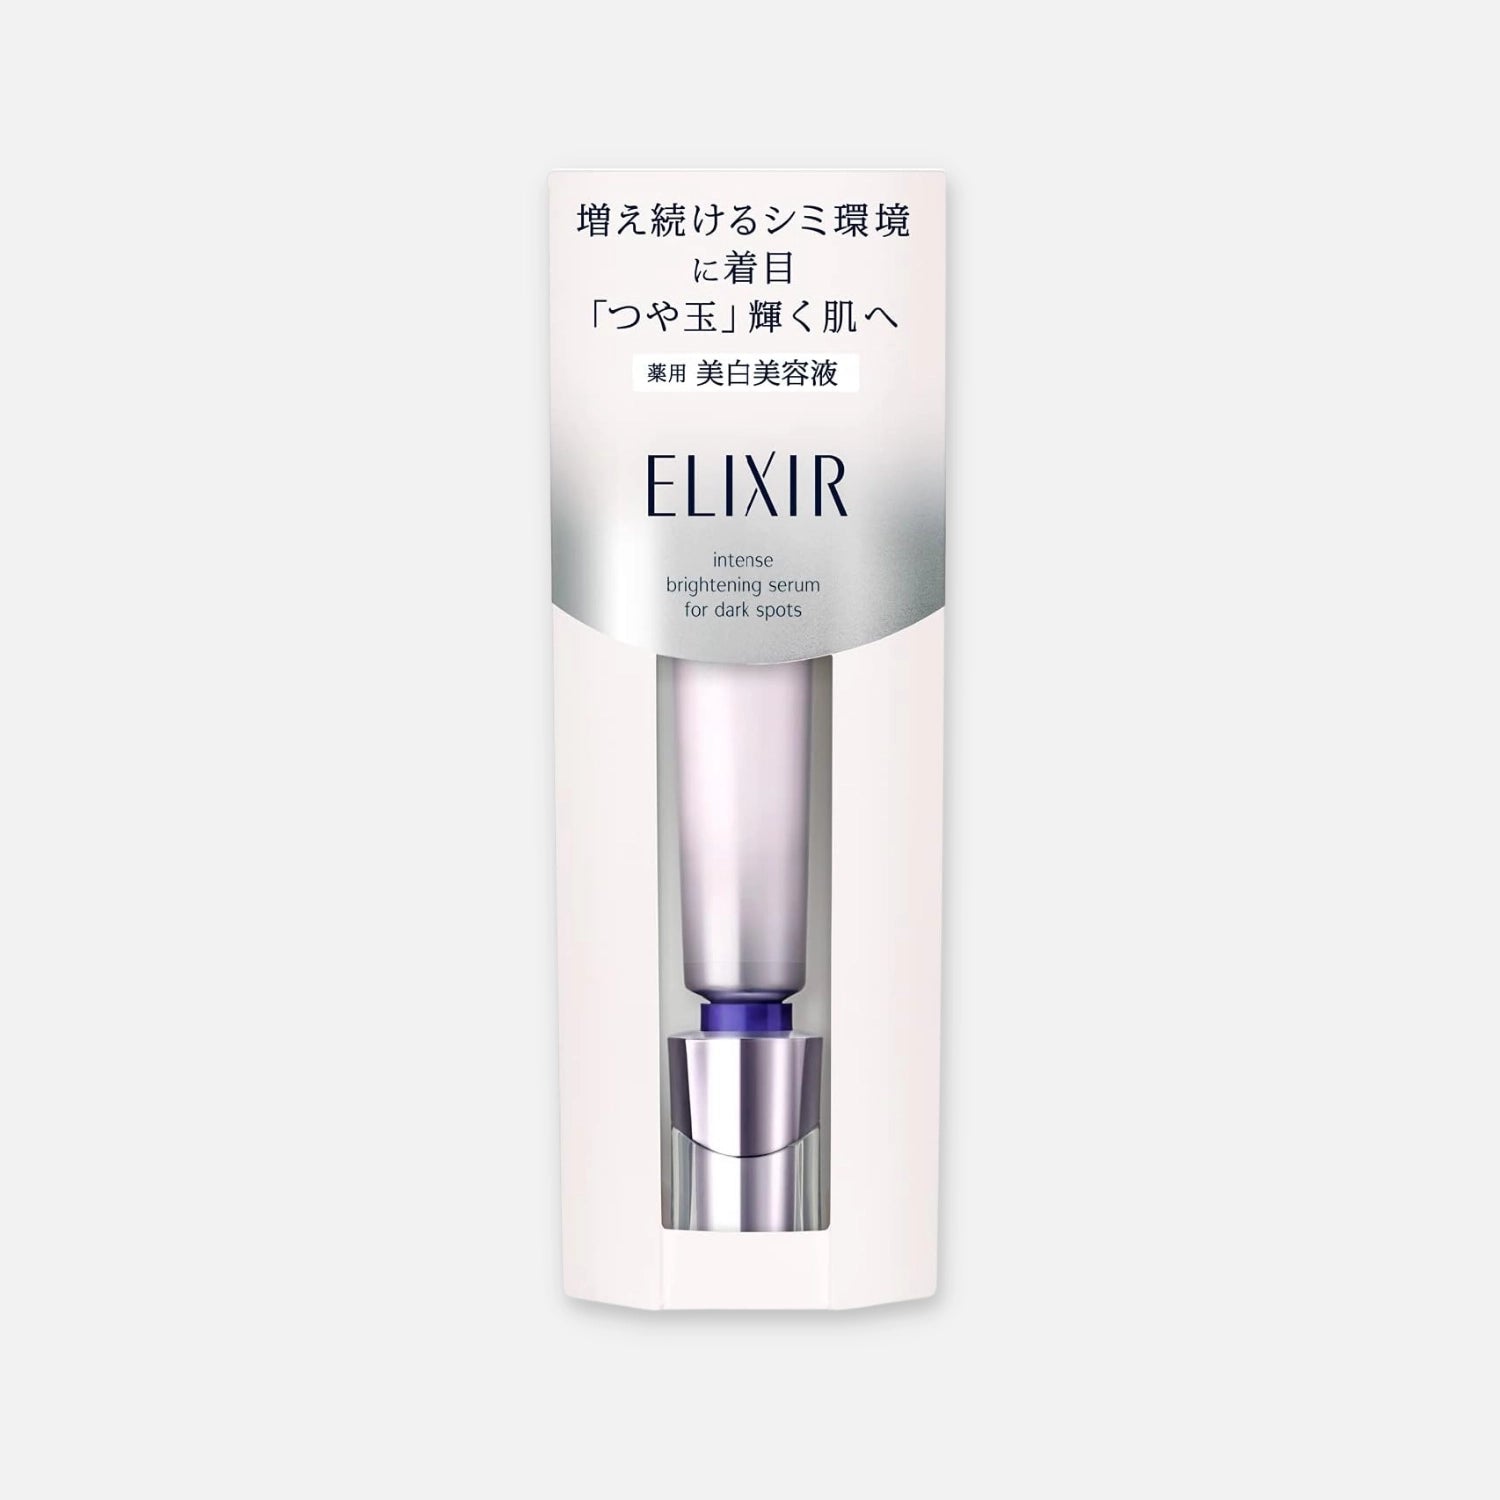 Shiseido Elixir Intense Brightening Serum For Dark Spots 22g - Buy Me Japan